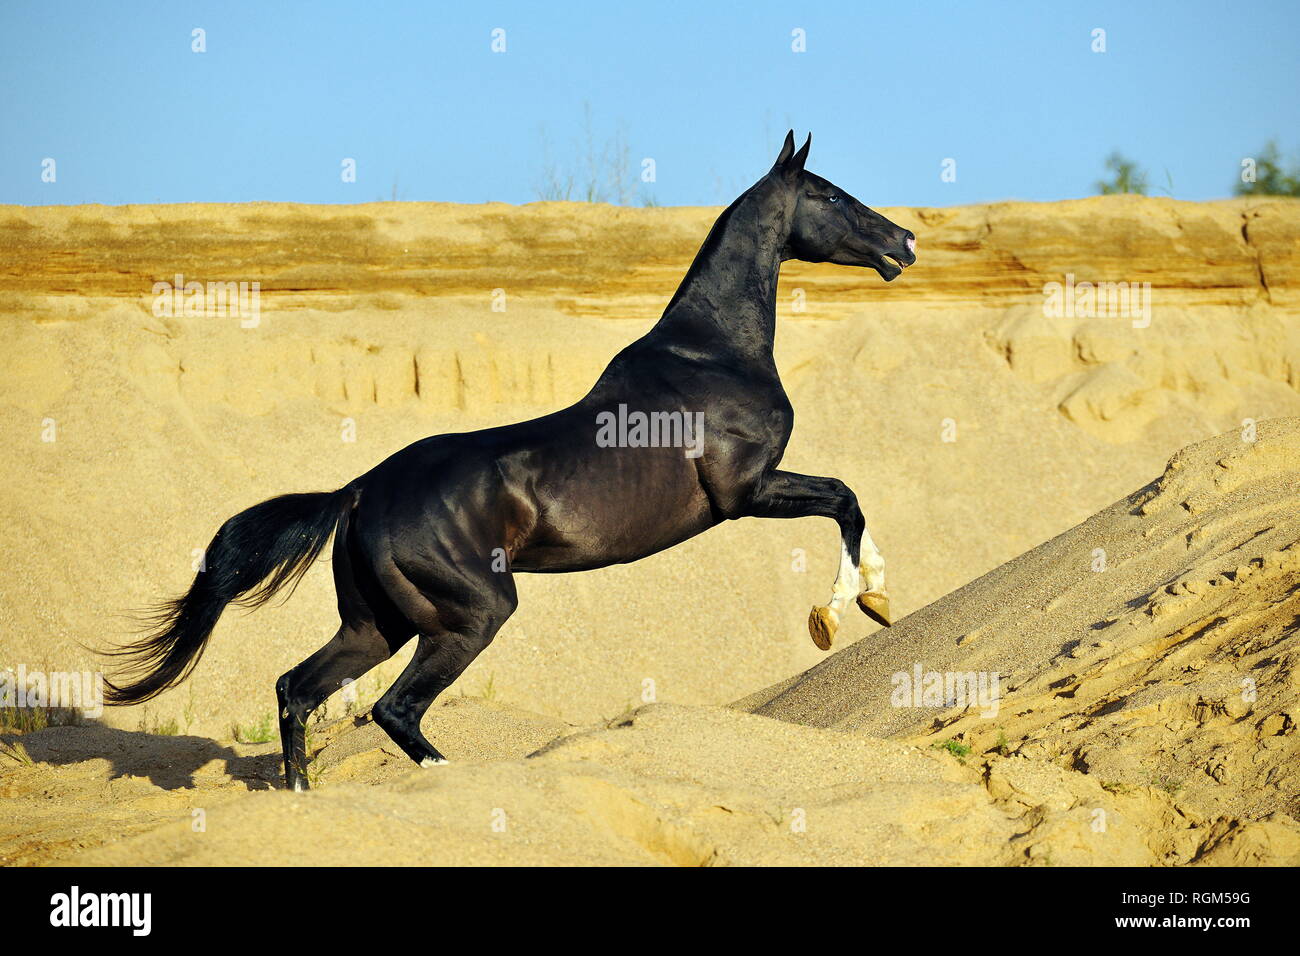 Extremely slender black akhal teke stallion leaping upwards in desert dunes. Horse neighing. Horizontal photo, side view, in motion. Stock Photo